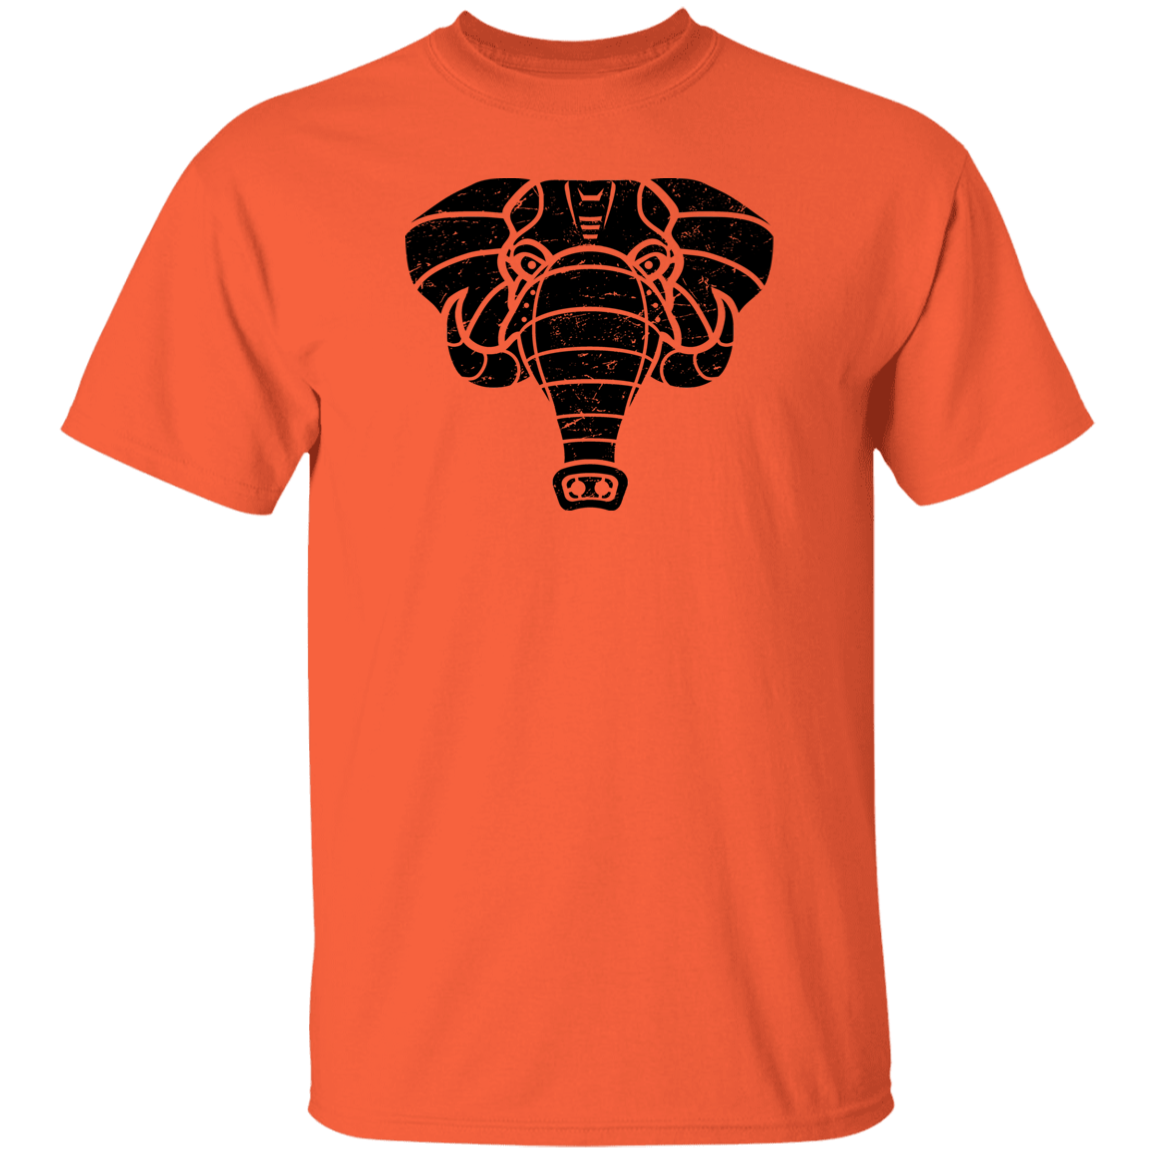 Black Distressed Emblem T-Shirt for Kids (Elephant/Quake)